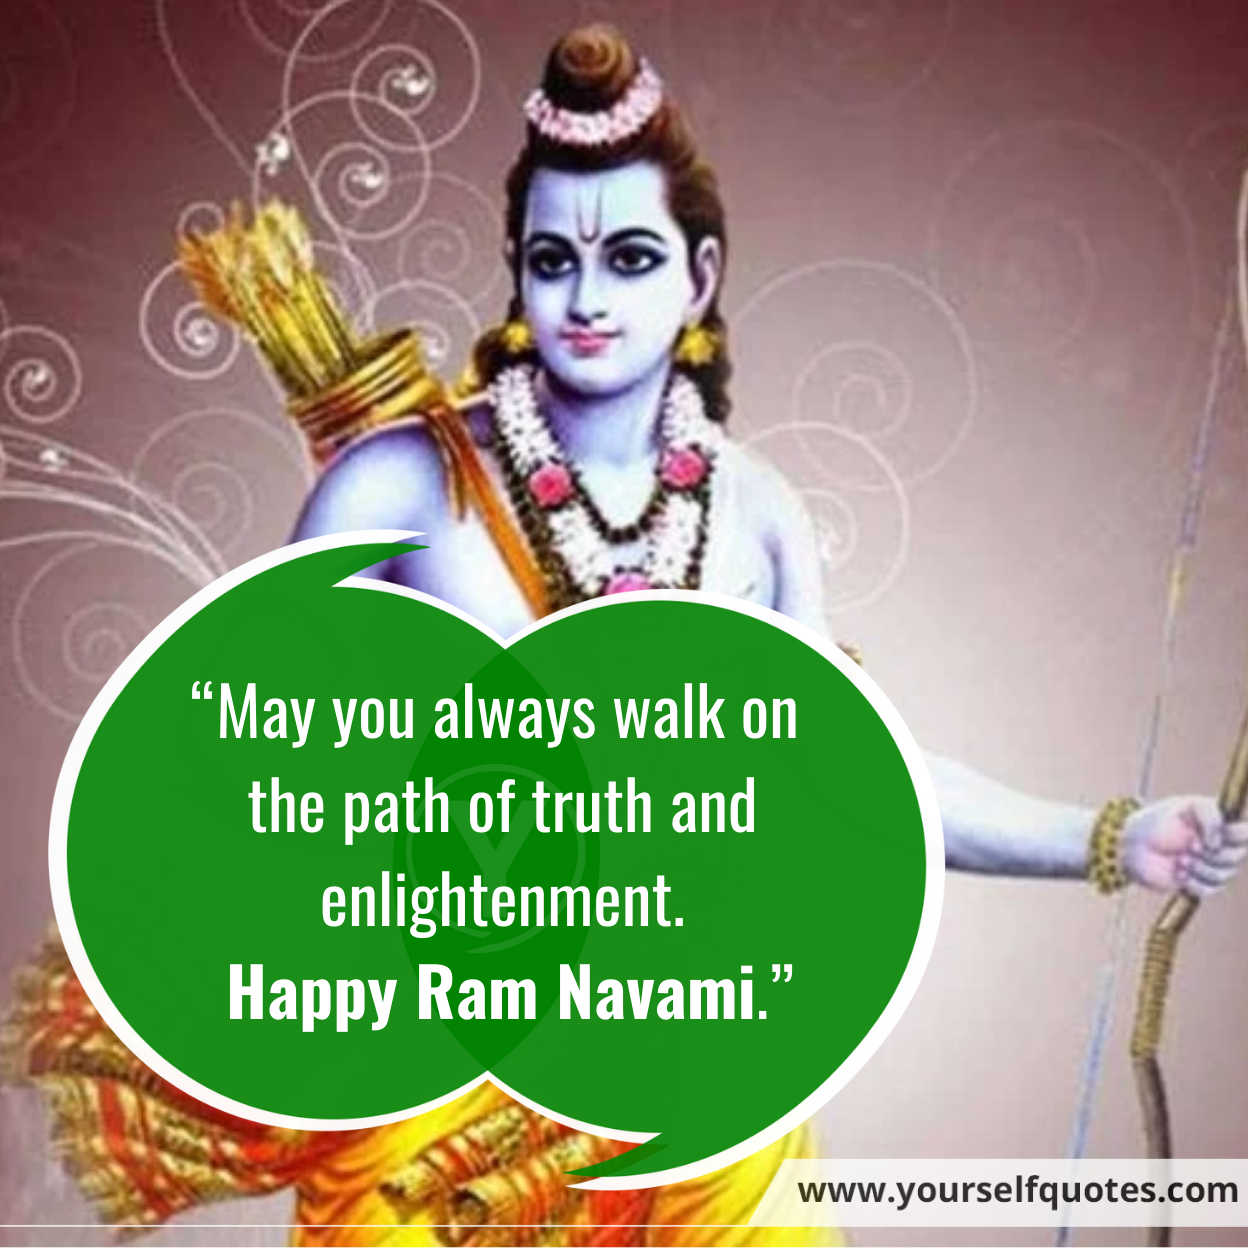 Ram Navami Wishes Images